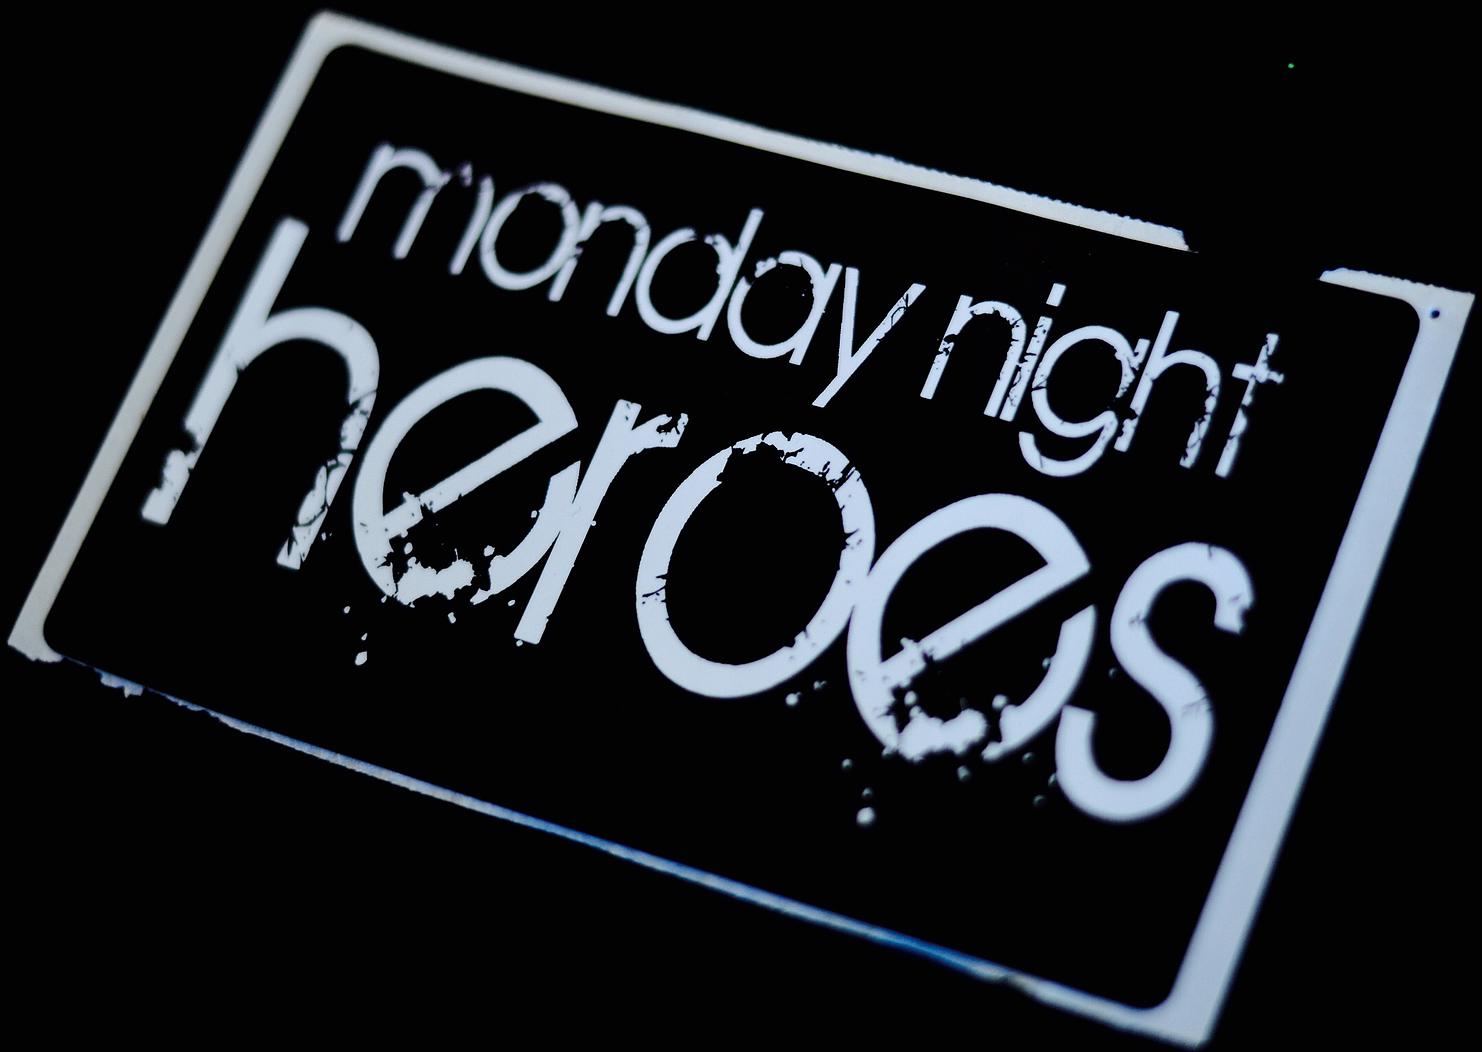 Monday Night Heroes